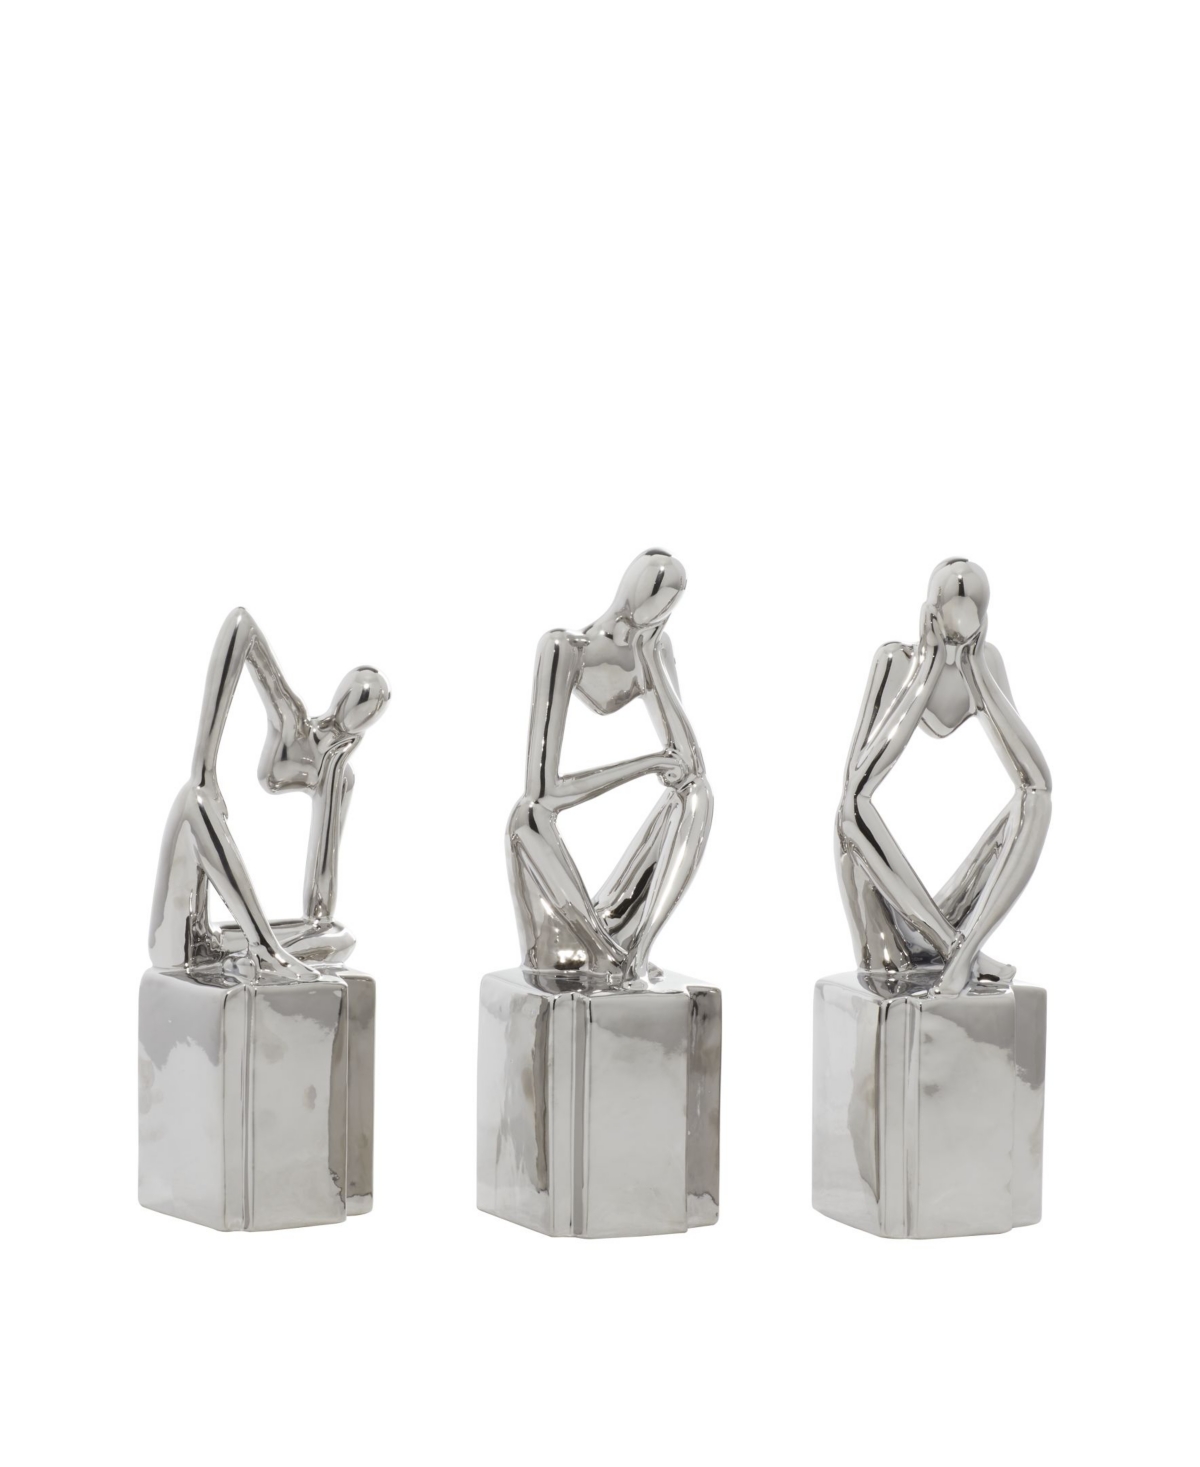 Cosmoliving By Cosmopolitan Ceramic Sculpture, Set Of 3 In Silver-tone